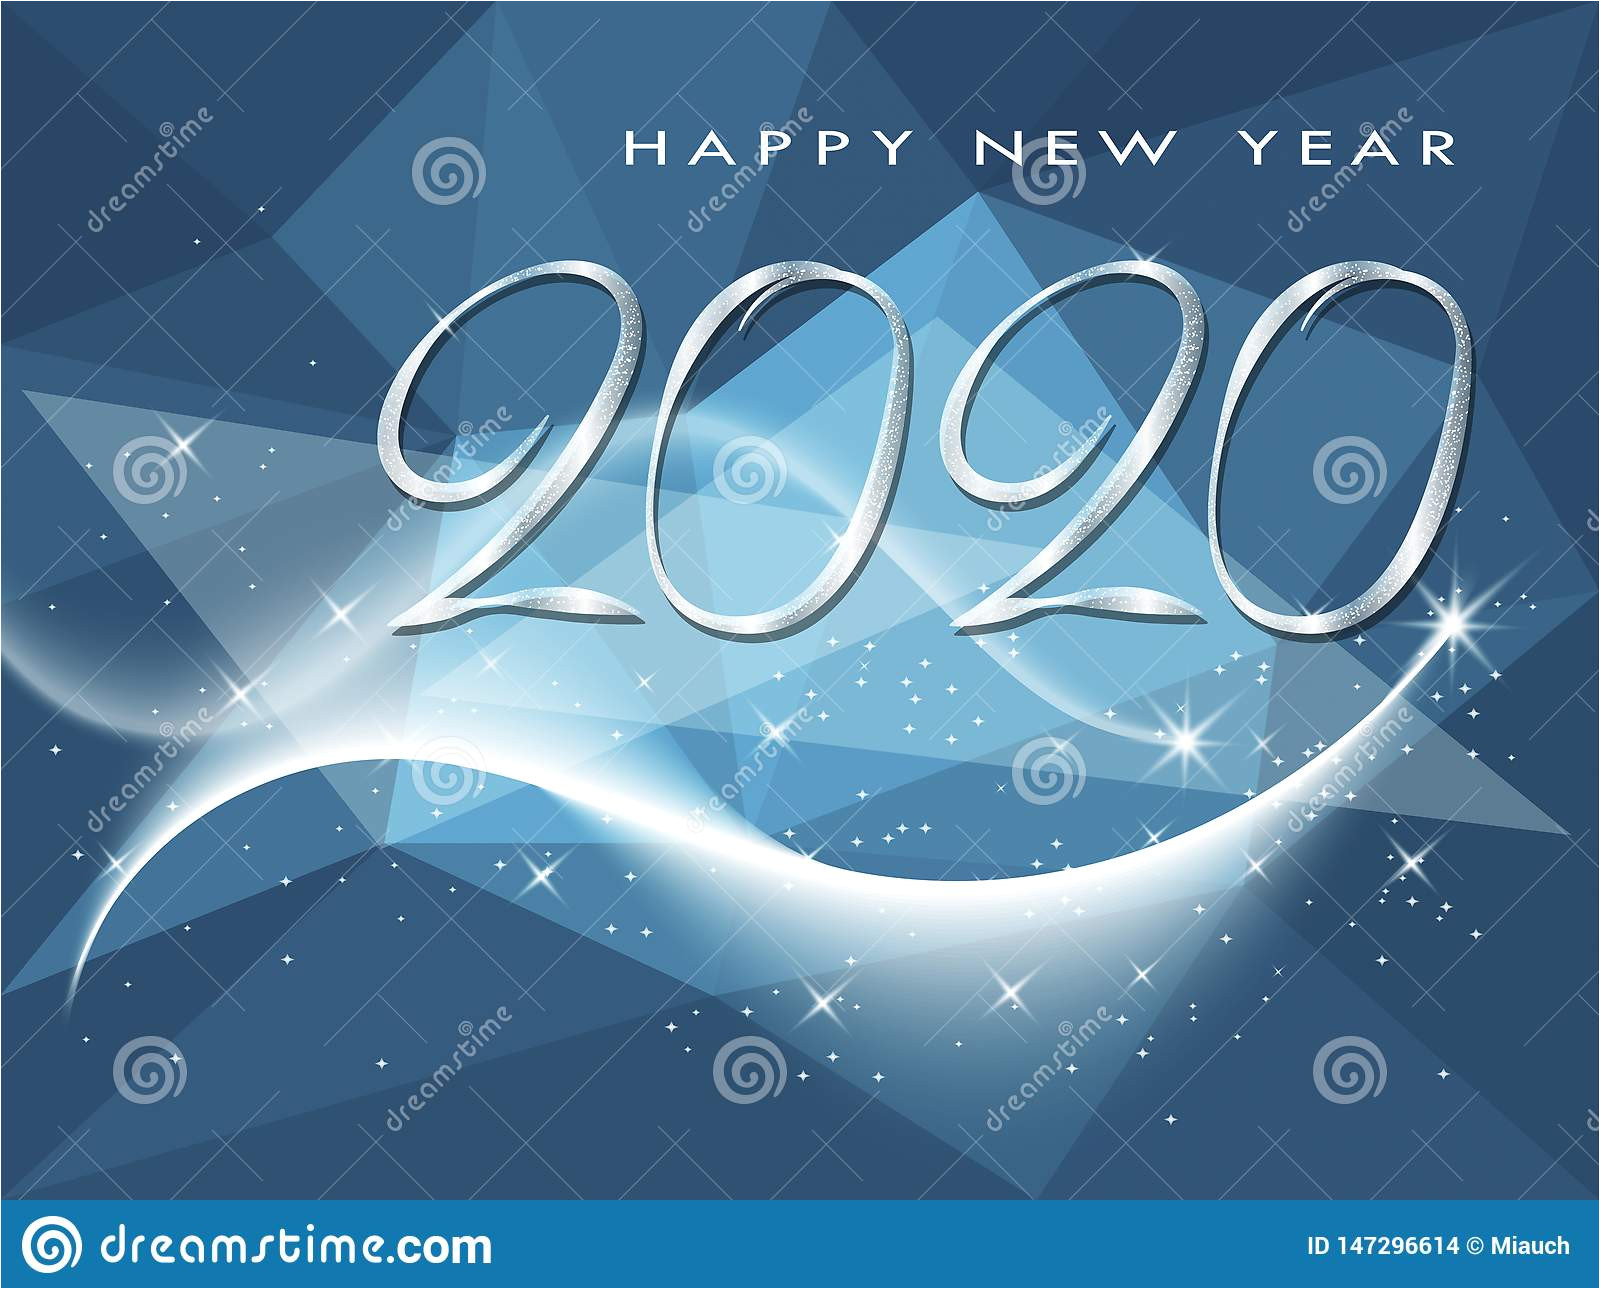 happy new year winter holiday greeting card 147296614 jpg